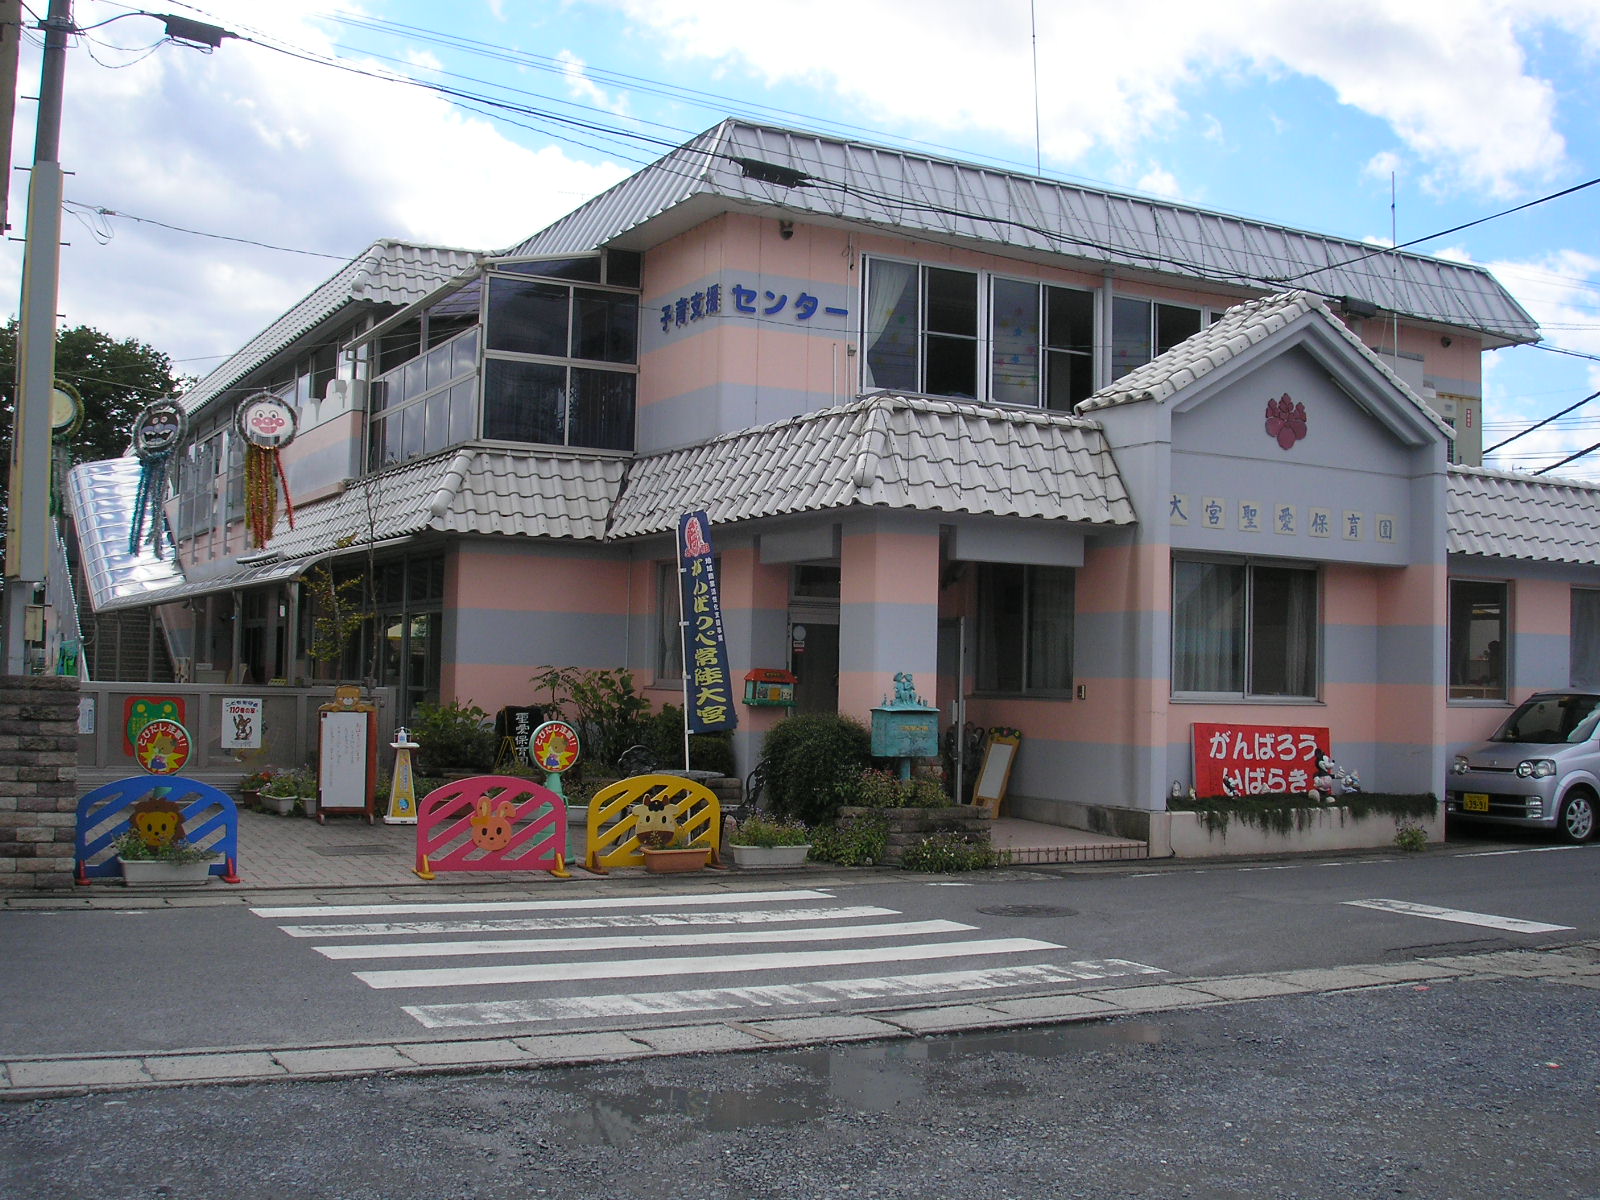 kindergarten ・ Nursery. Omiya HijiriAi nursery school (kindergarten ・ 867m to the nursery)